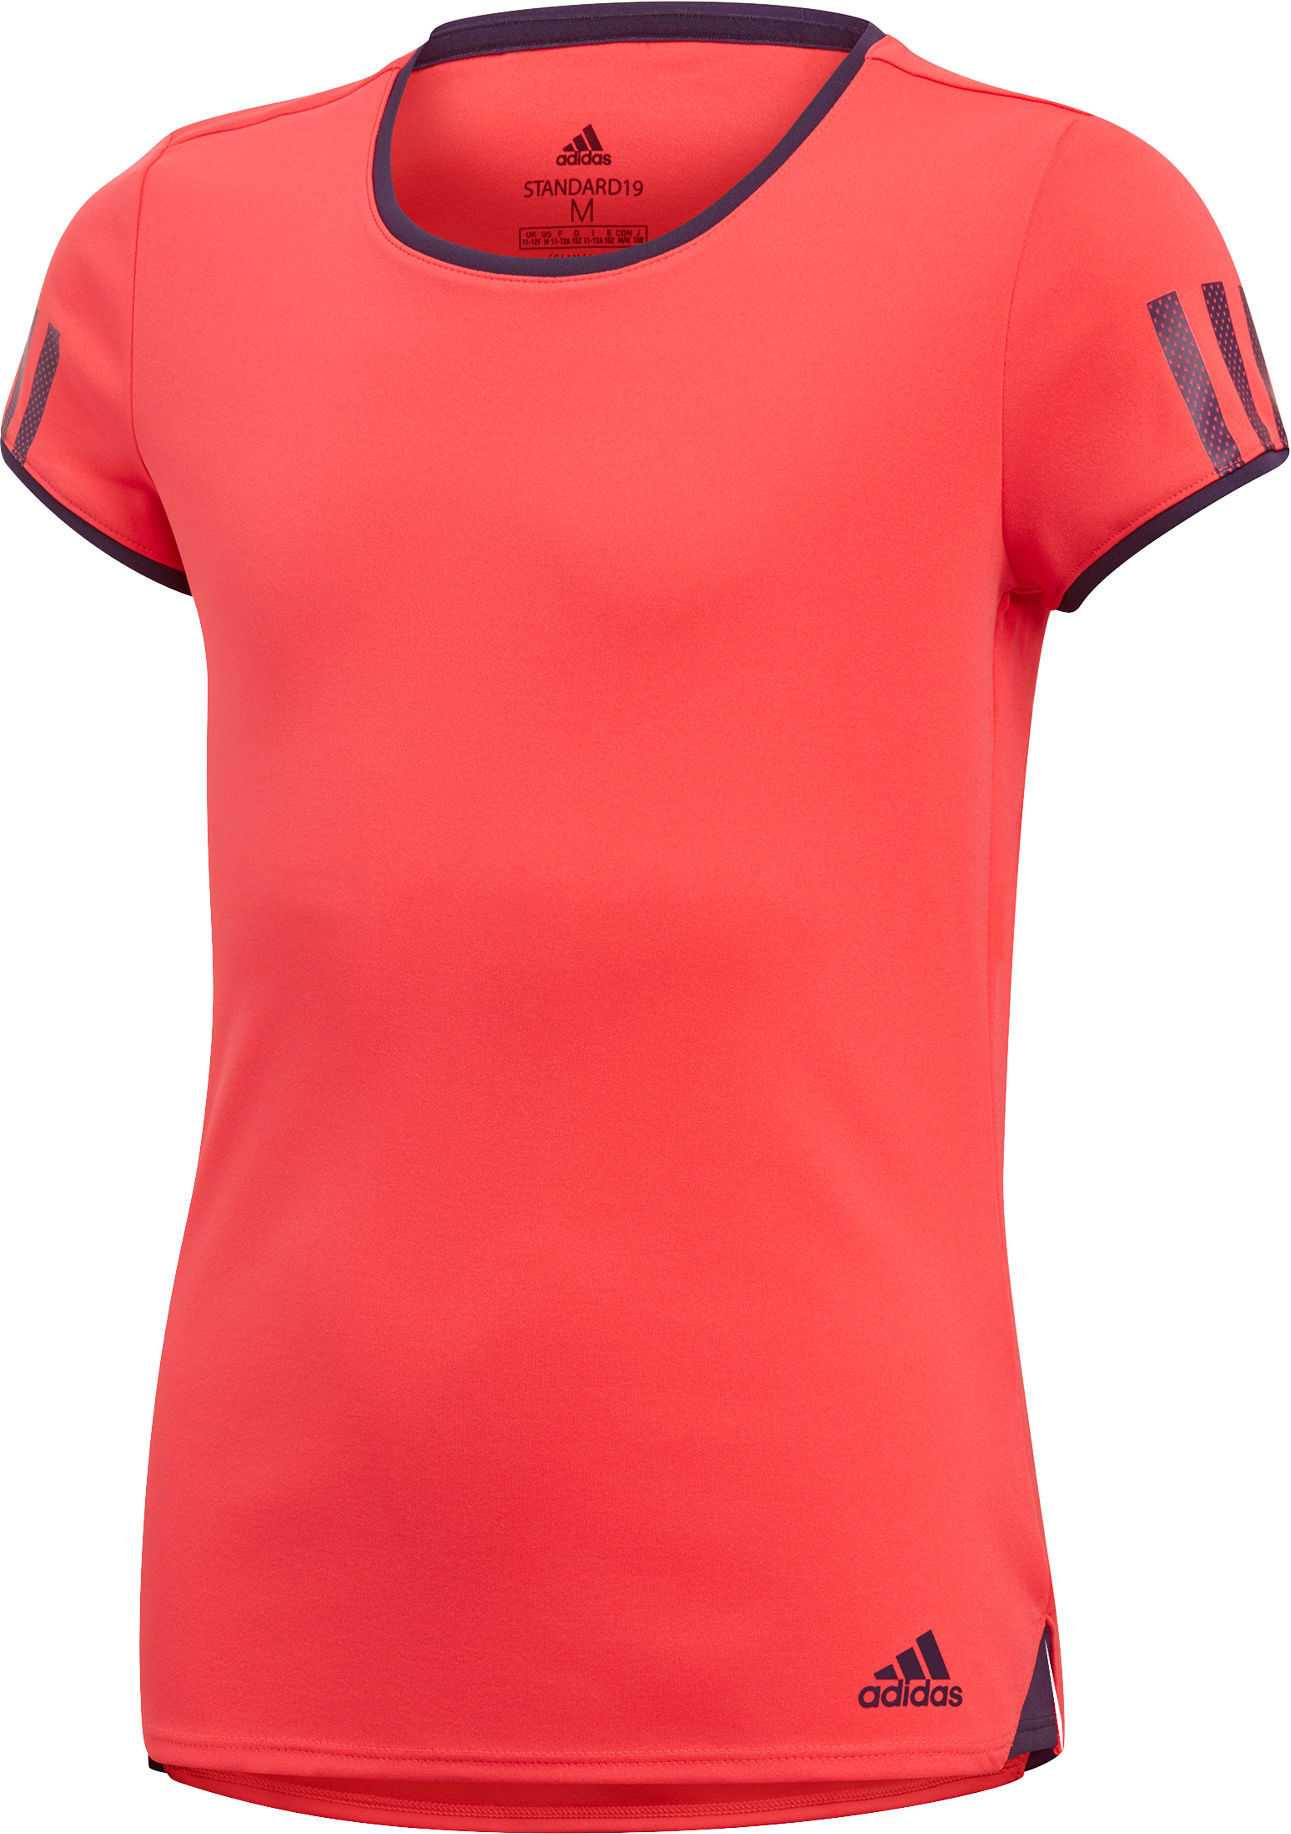 Adidas Girls Club T-shirt Träningströja Coral 116